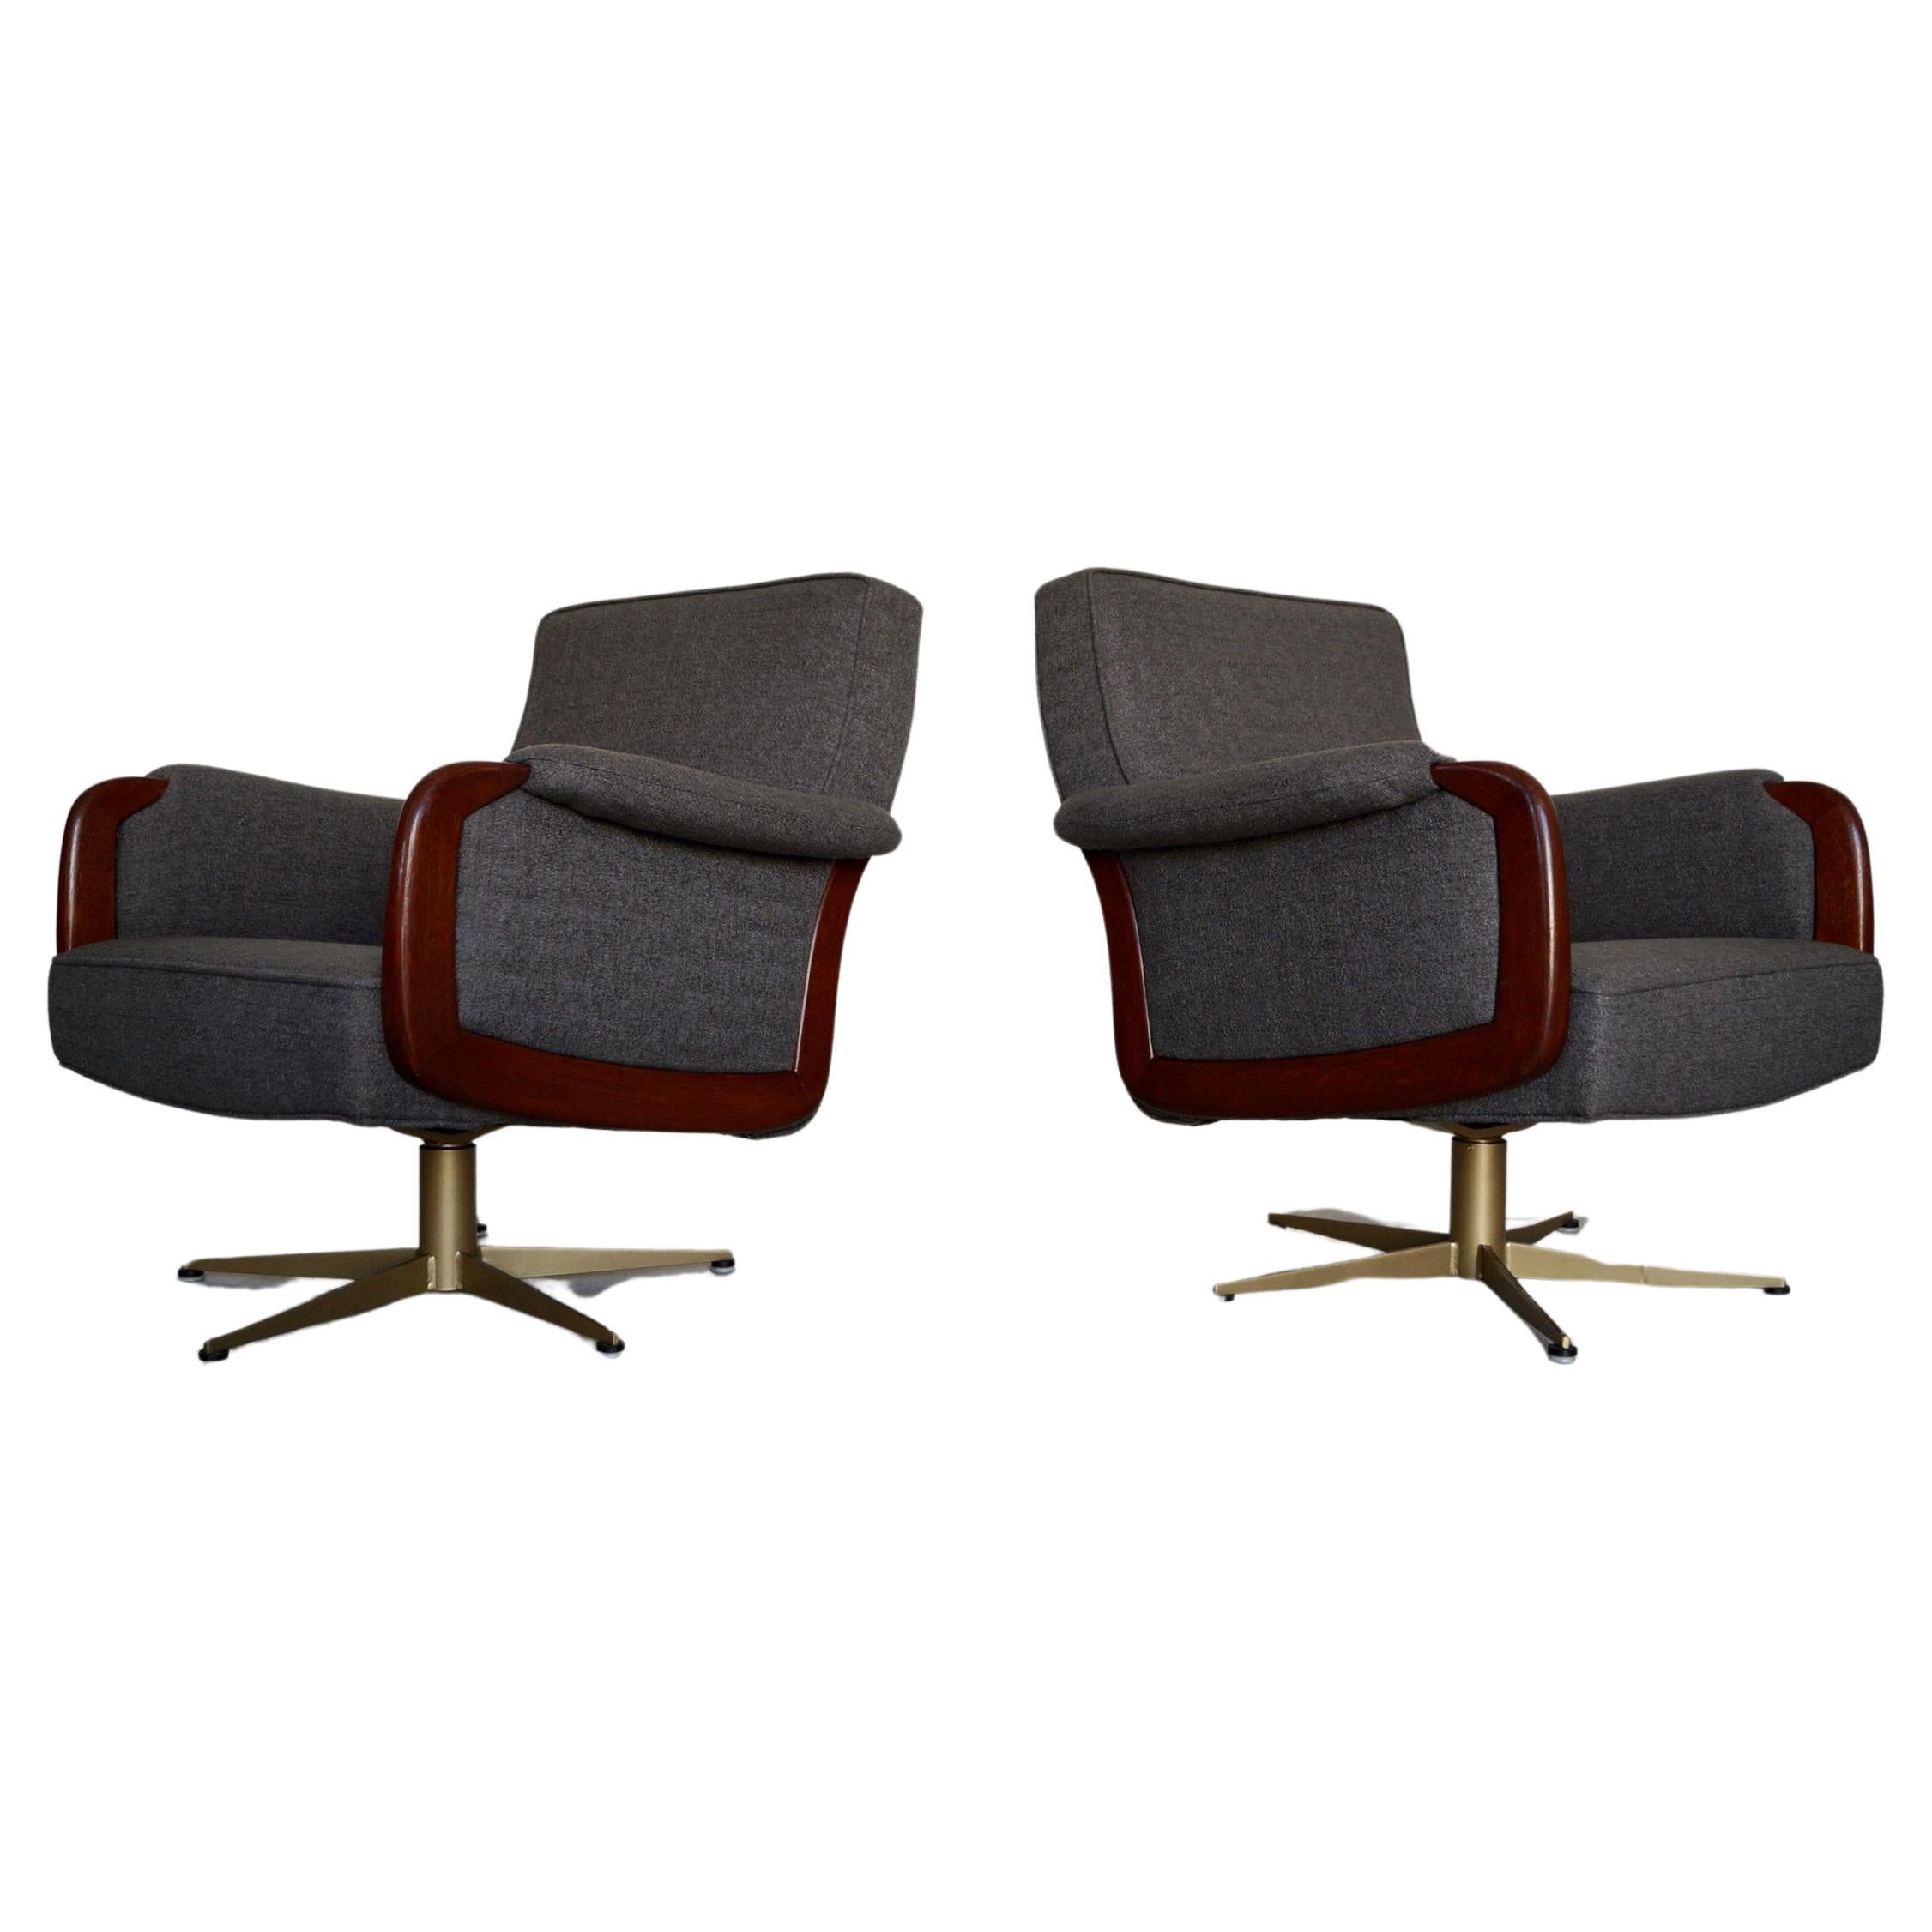 1970's Mid-Century Modern Swivel Lounge Chairs - ein Paar